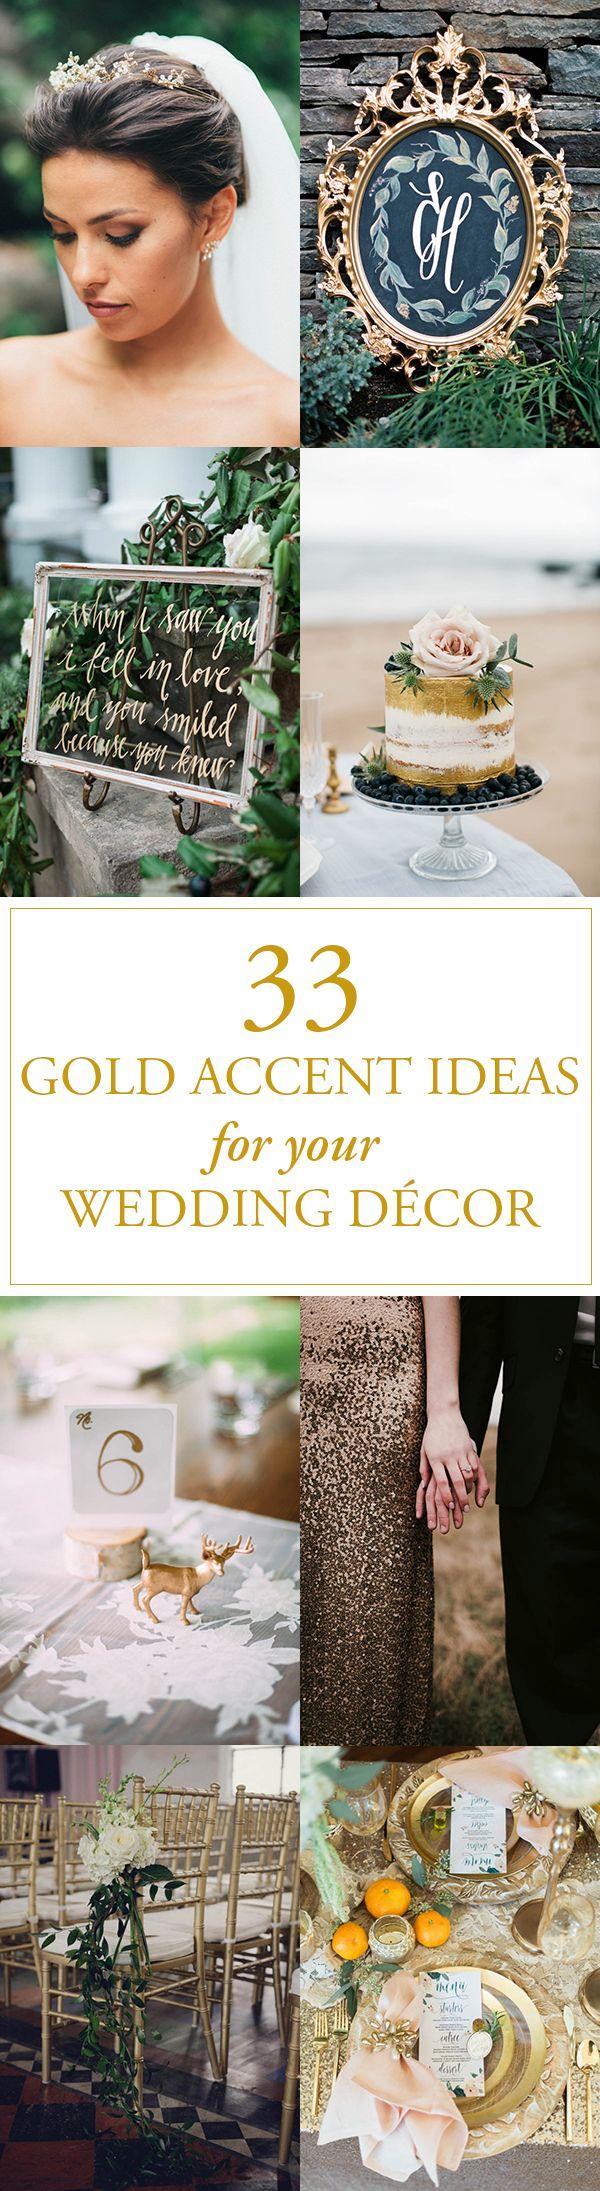 Hochzeit - Make Your Wedding Décor Shine With These Gold Accent Ideas